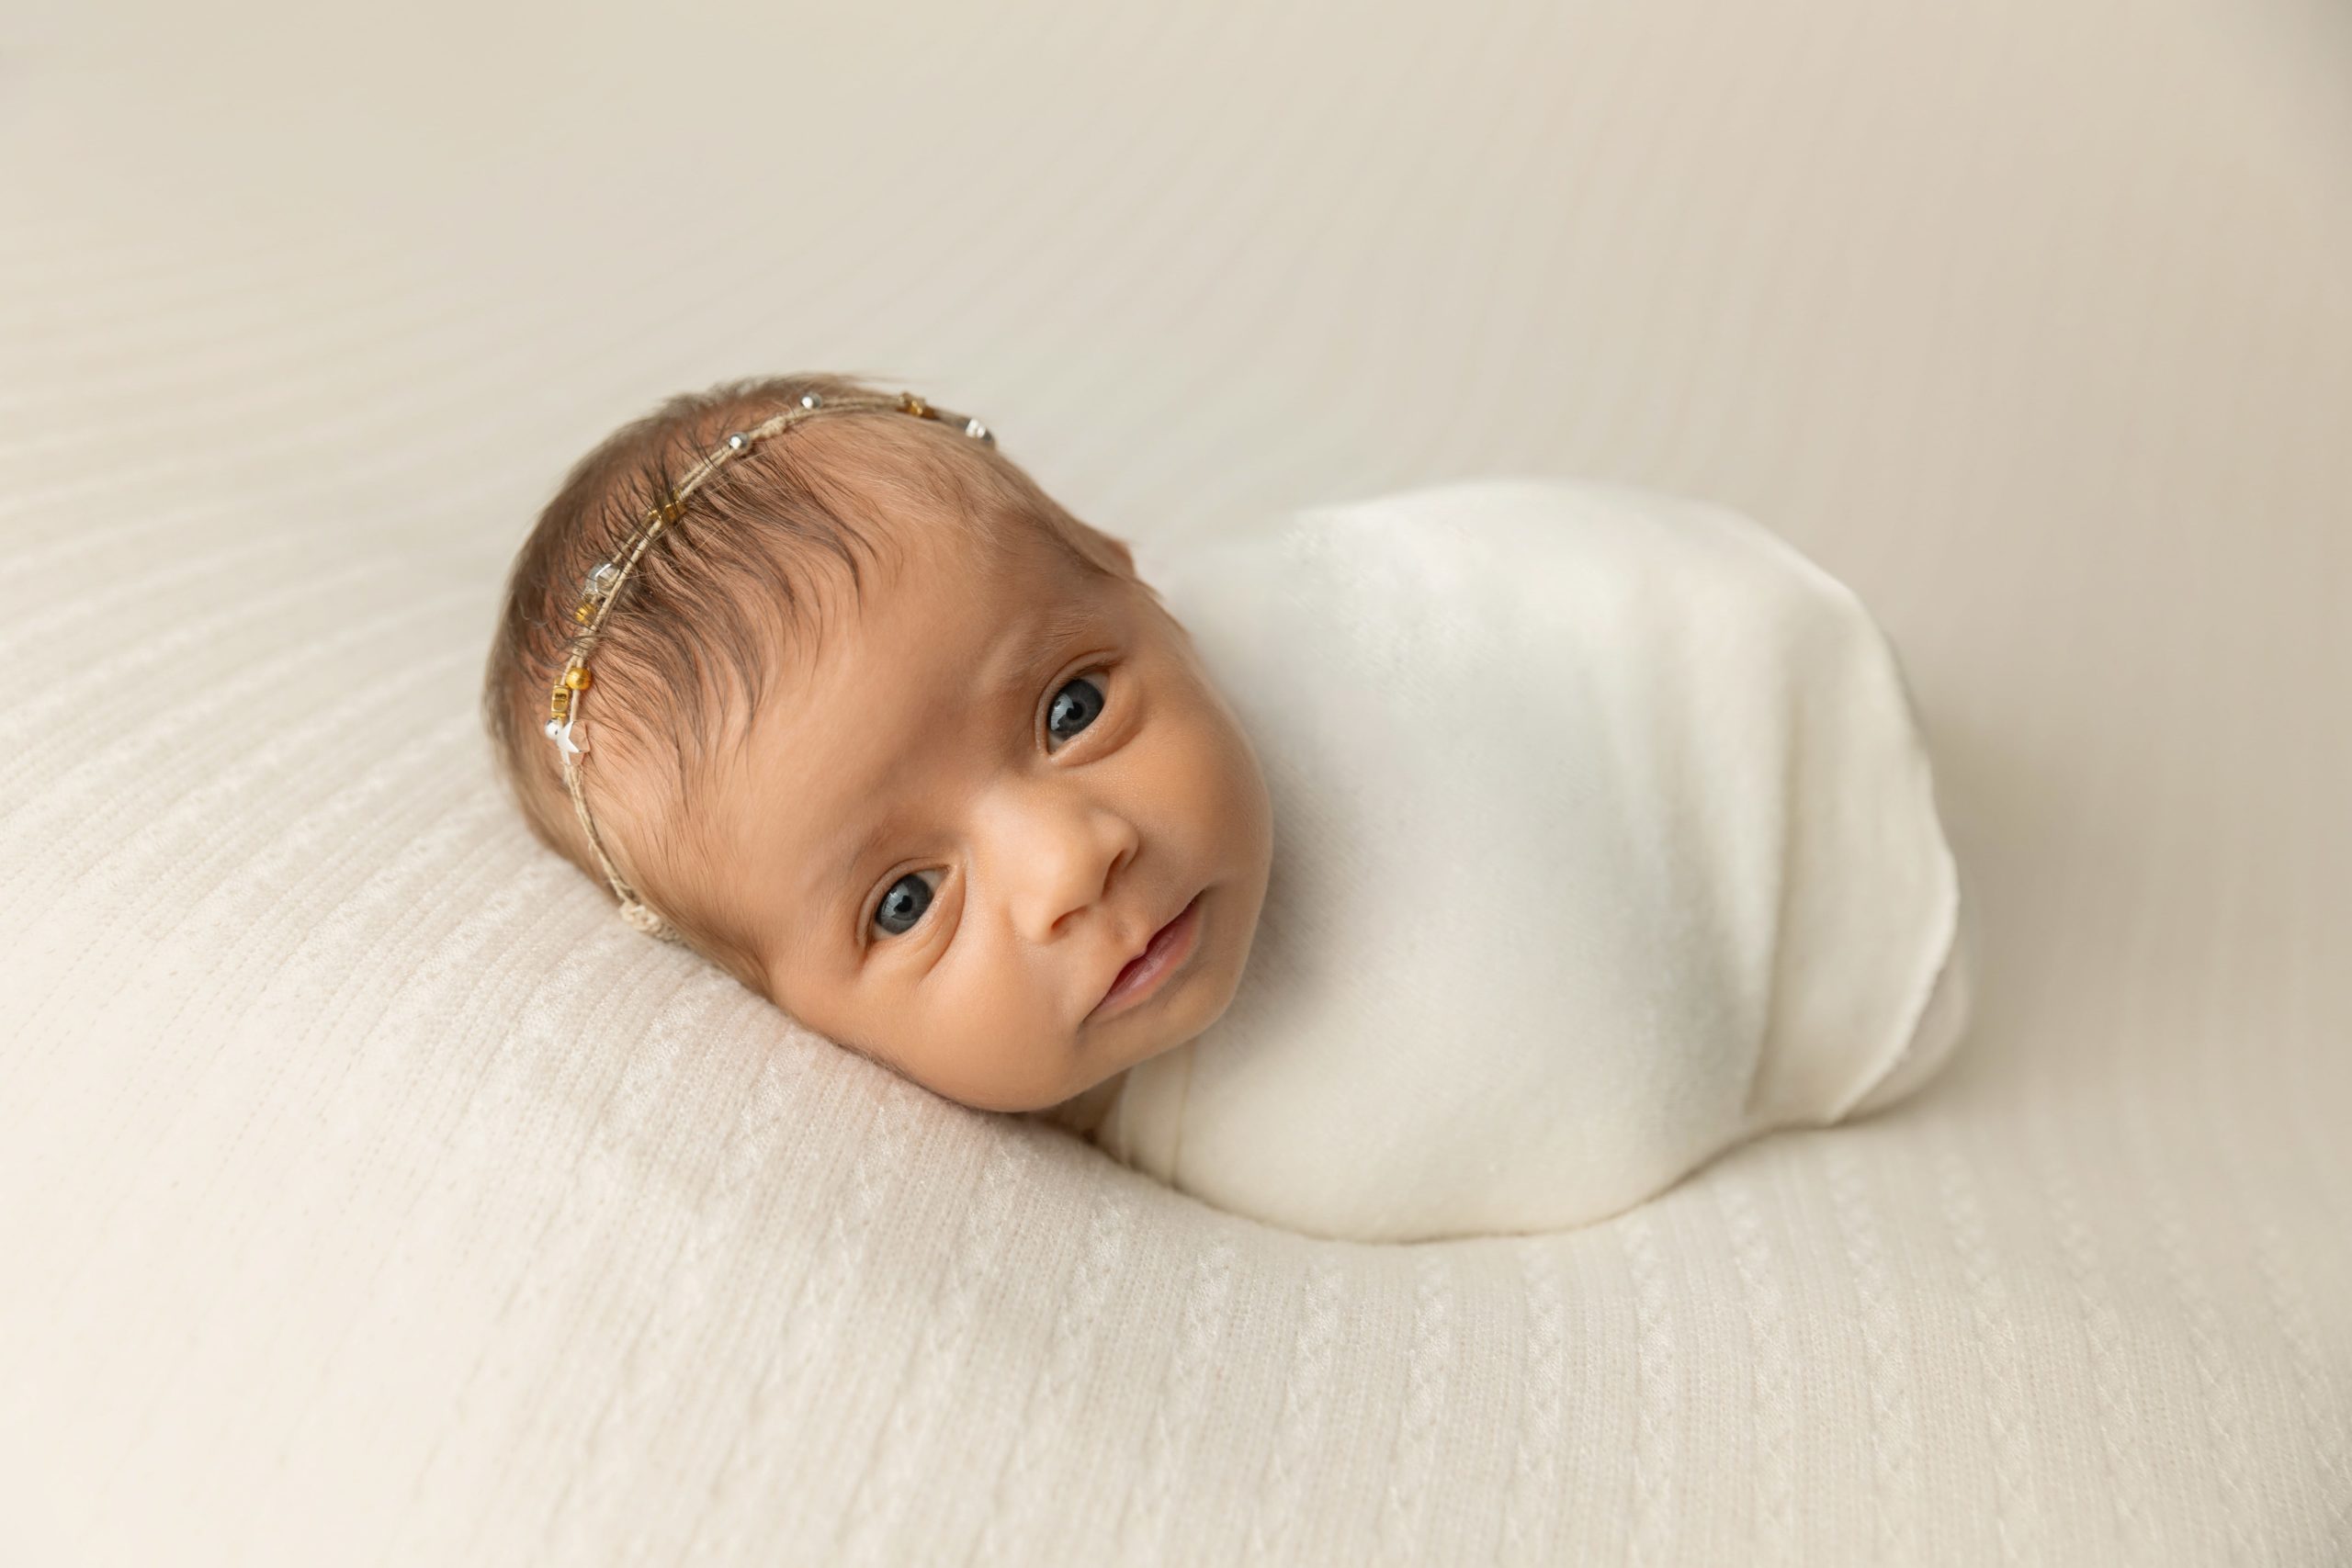 newborn photoshoot near me, best newborn photography in philadelphia, newborn photography studio